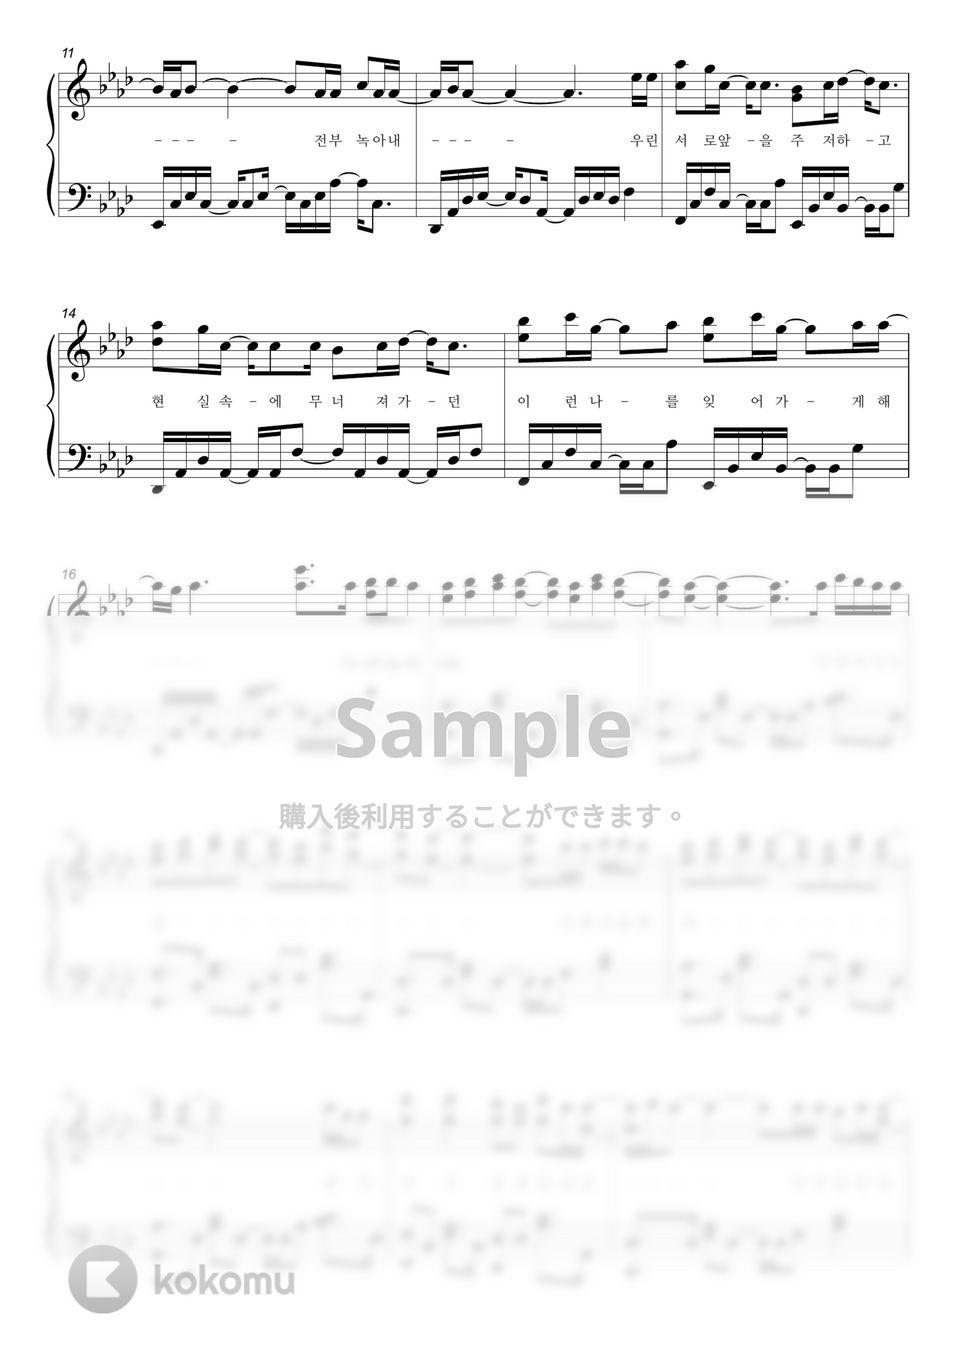 Twenty-Five Twenty-One - 아주, 천천히(Very, Slowly) (PIANO COVER) by HANPPYEOMPIANO